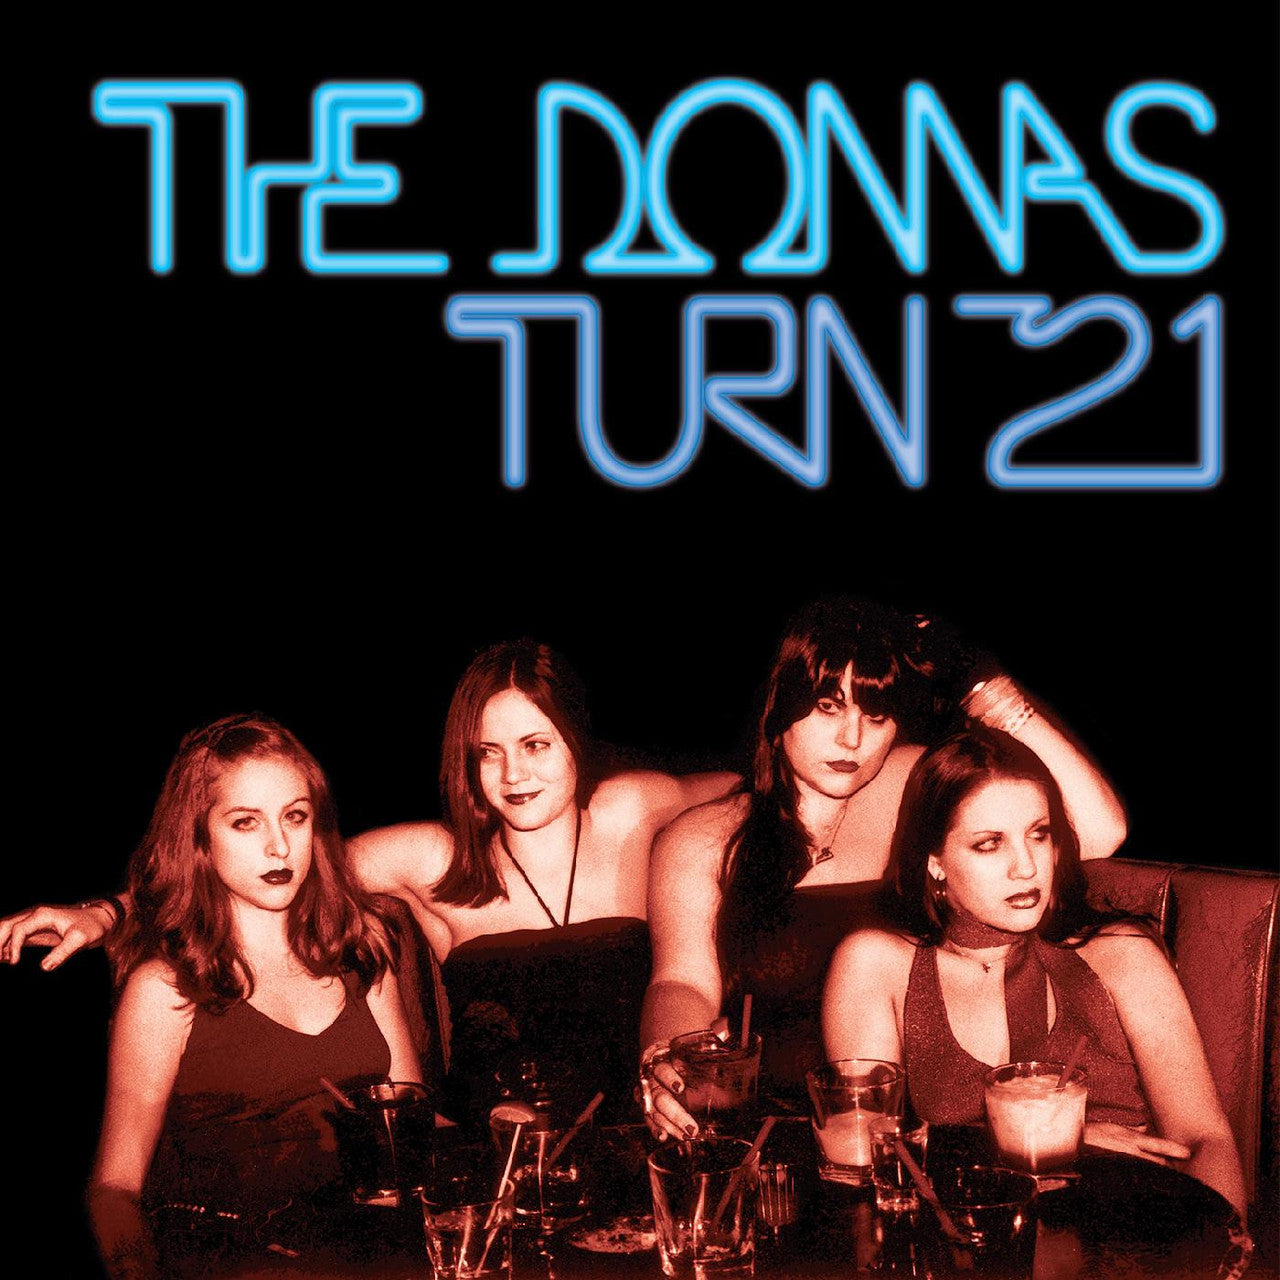 Donnas, The "Turn 21" [Blue Ice Vinyl]